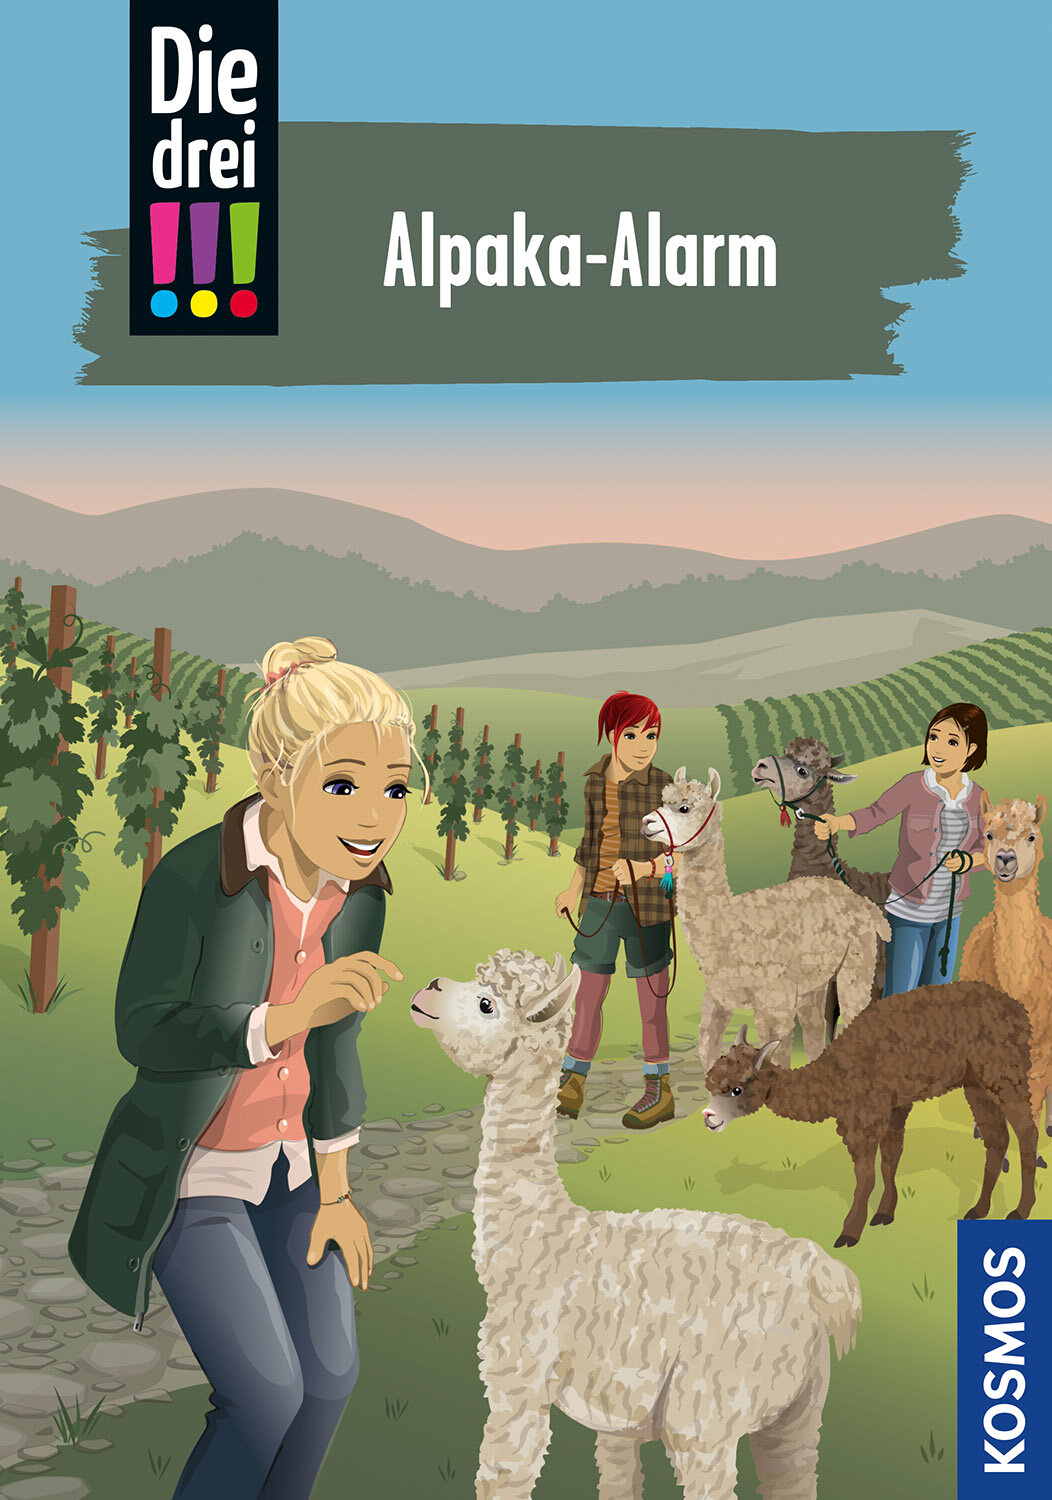 Die drei !!!  101  Alpaka-Alarm